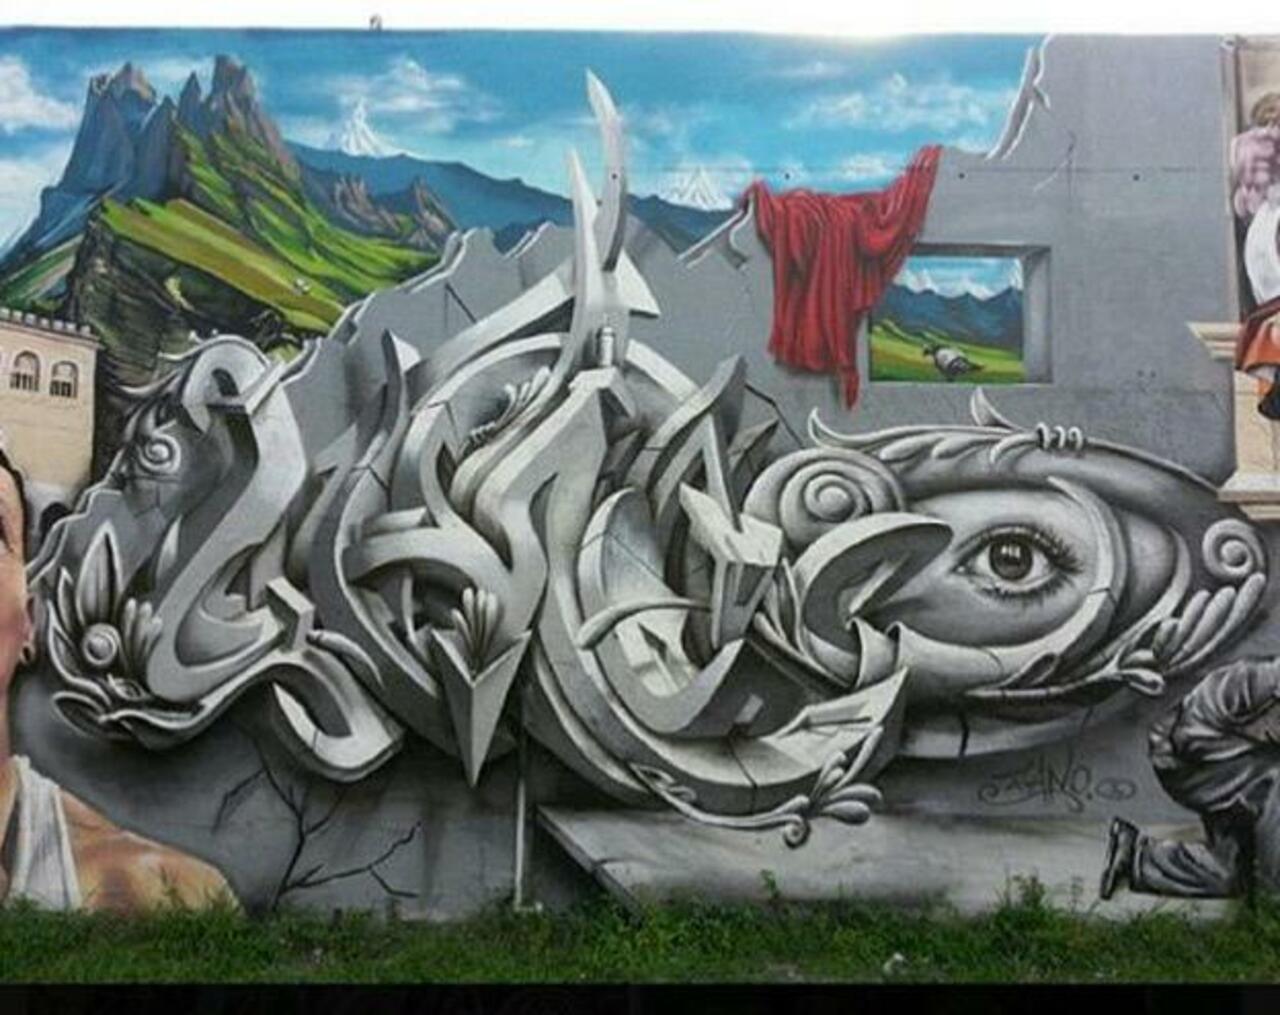 RT belilac "RT belilac "Street Art by Smog One

#art #mural #graffiti #streetart http://t.co/gcxi02JMUG""